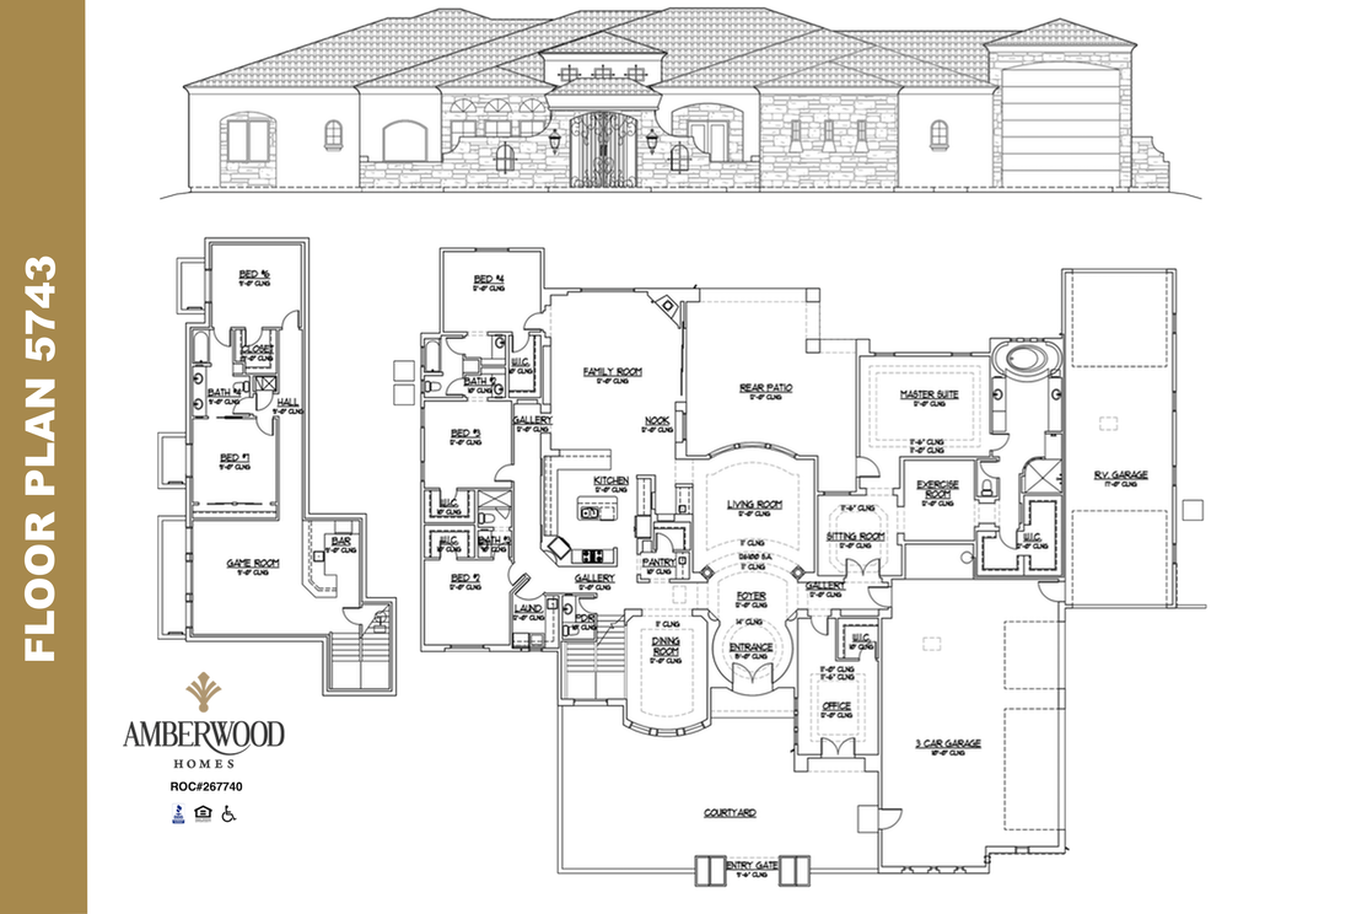 Amberwood homes, floor plan for plant 5743